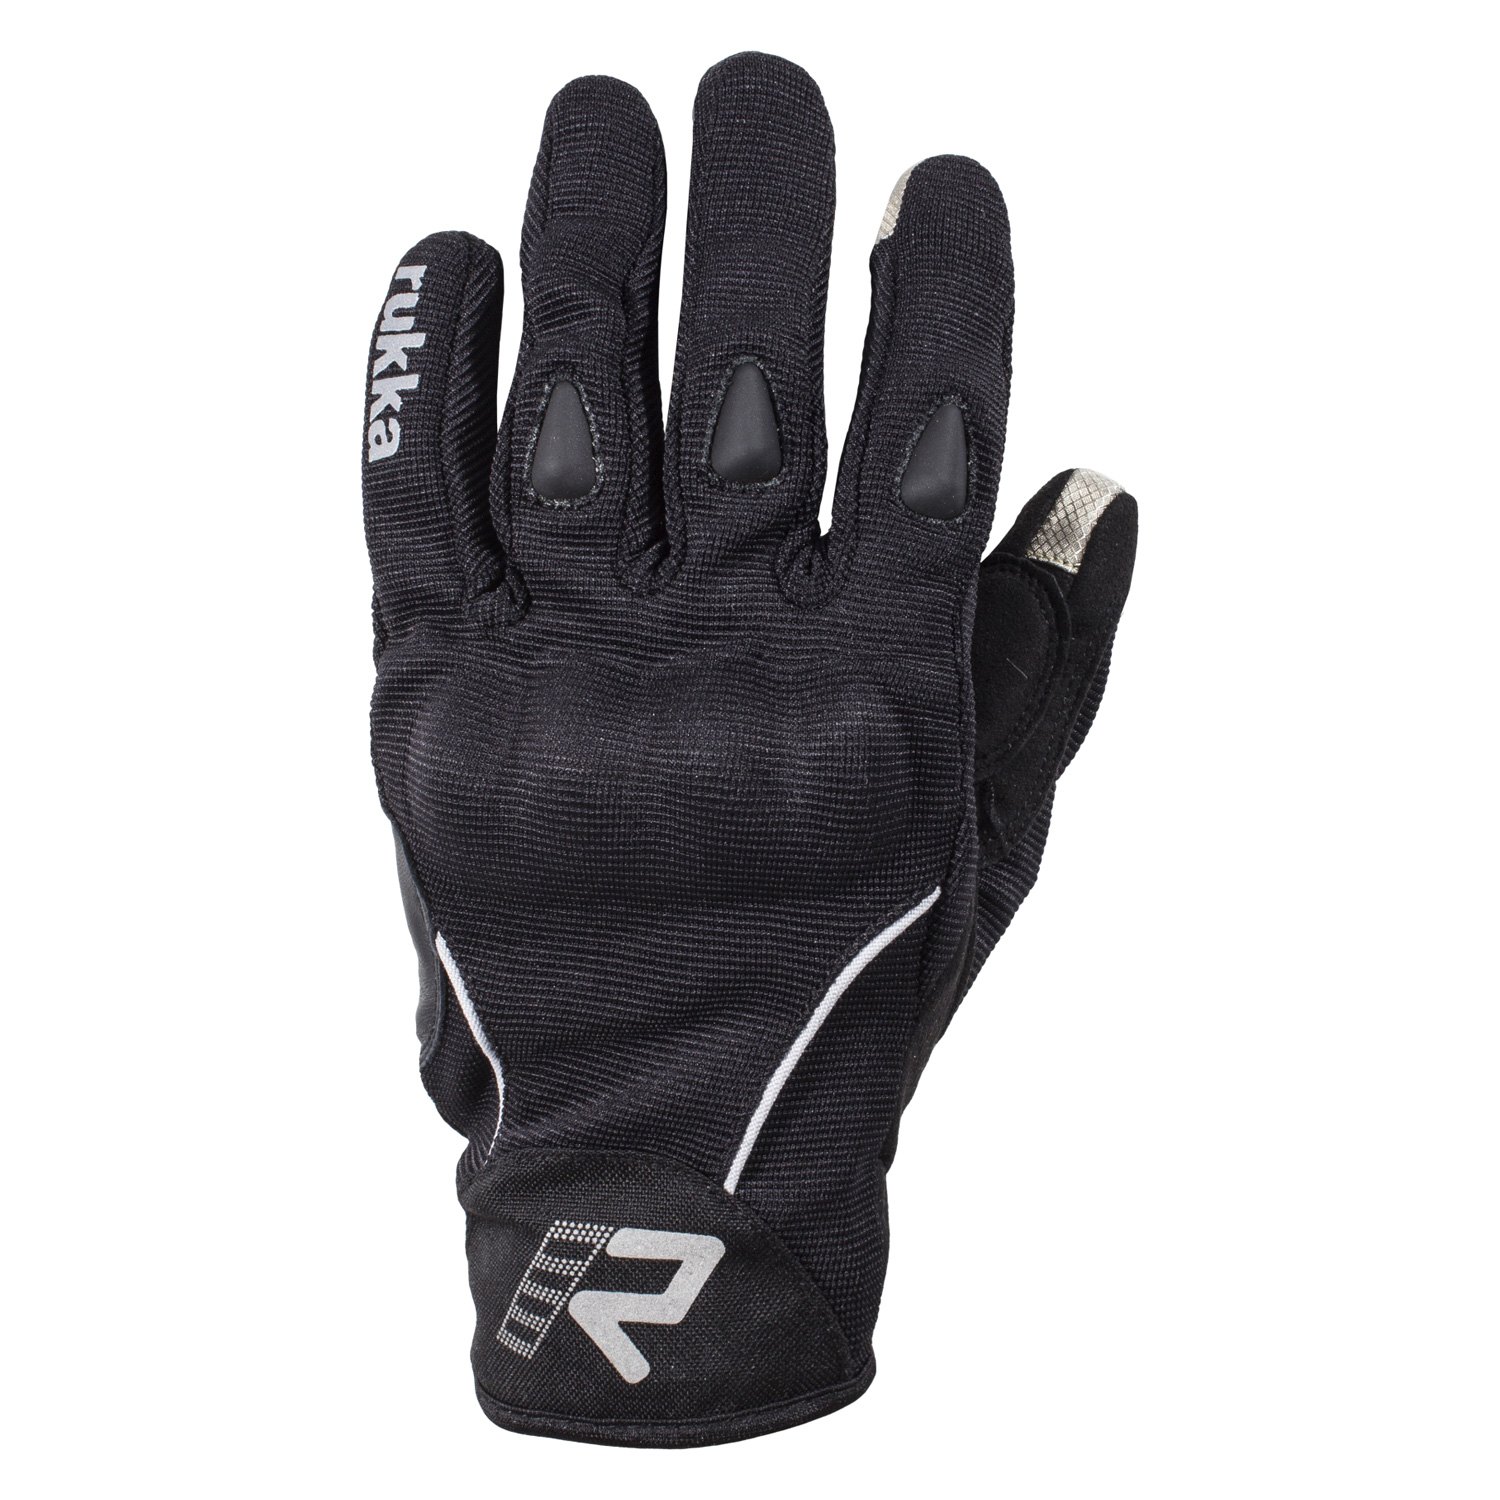 Rukka® 70869-778-990-8 - Airi Gloves (8, Black) - POWERSPORTSiD.com